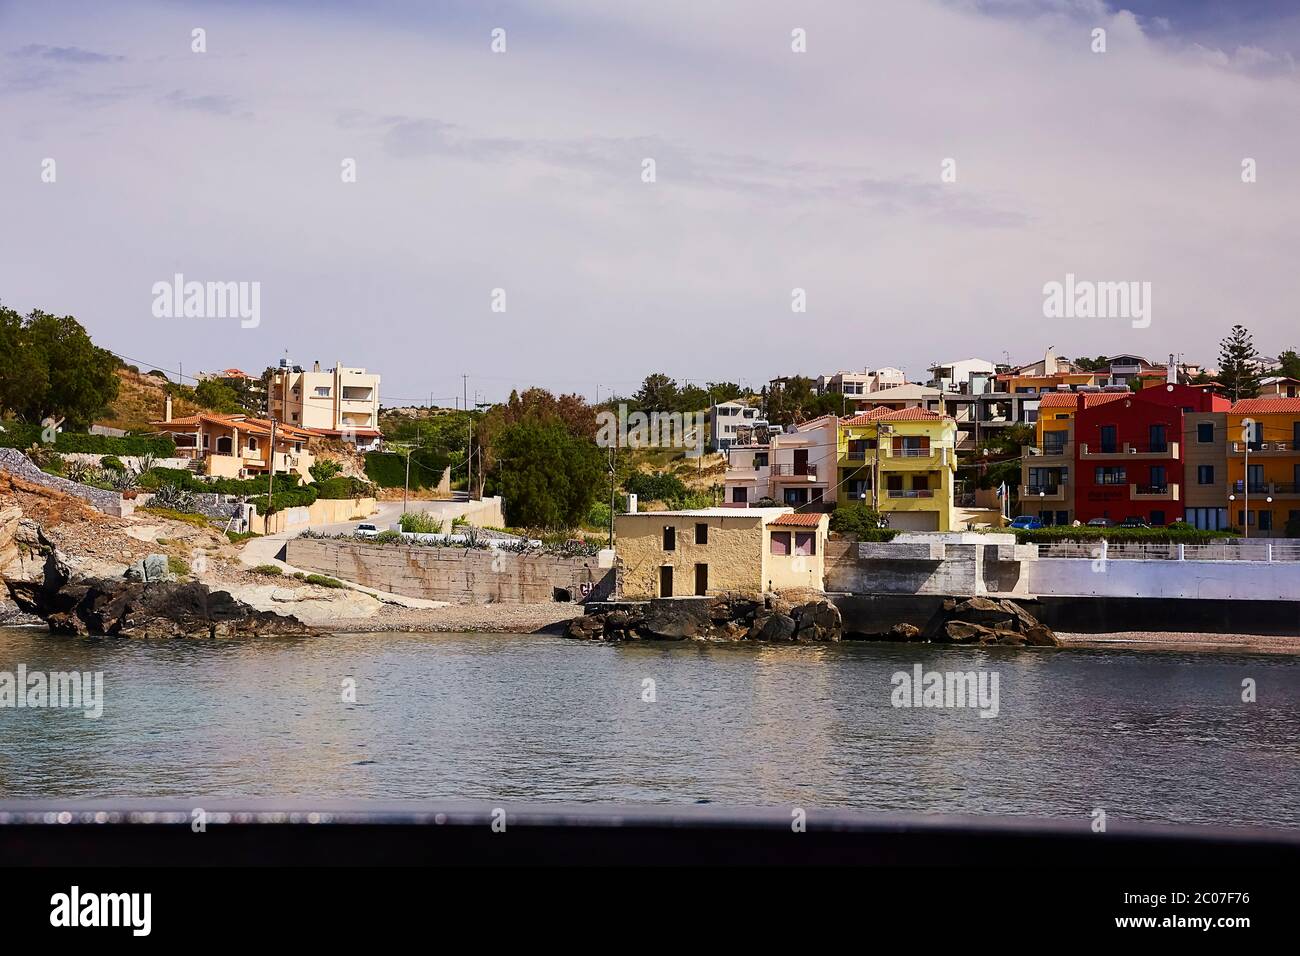 PANORMO, DIE INSEL KRETA, GRIECHENLAND - 30. MAI 2019: Schöne Aussicht auf das Dorf Panormo, die Insel Kreta, Griechenland Stockfoto